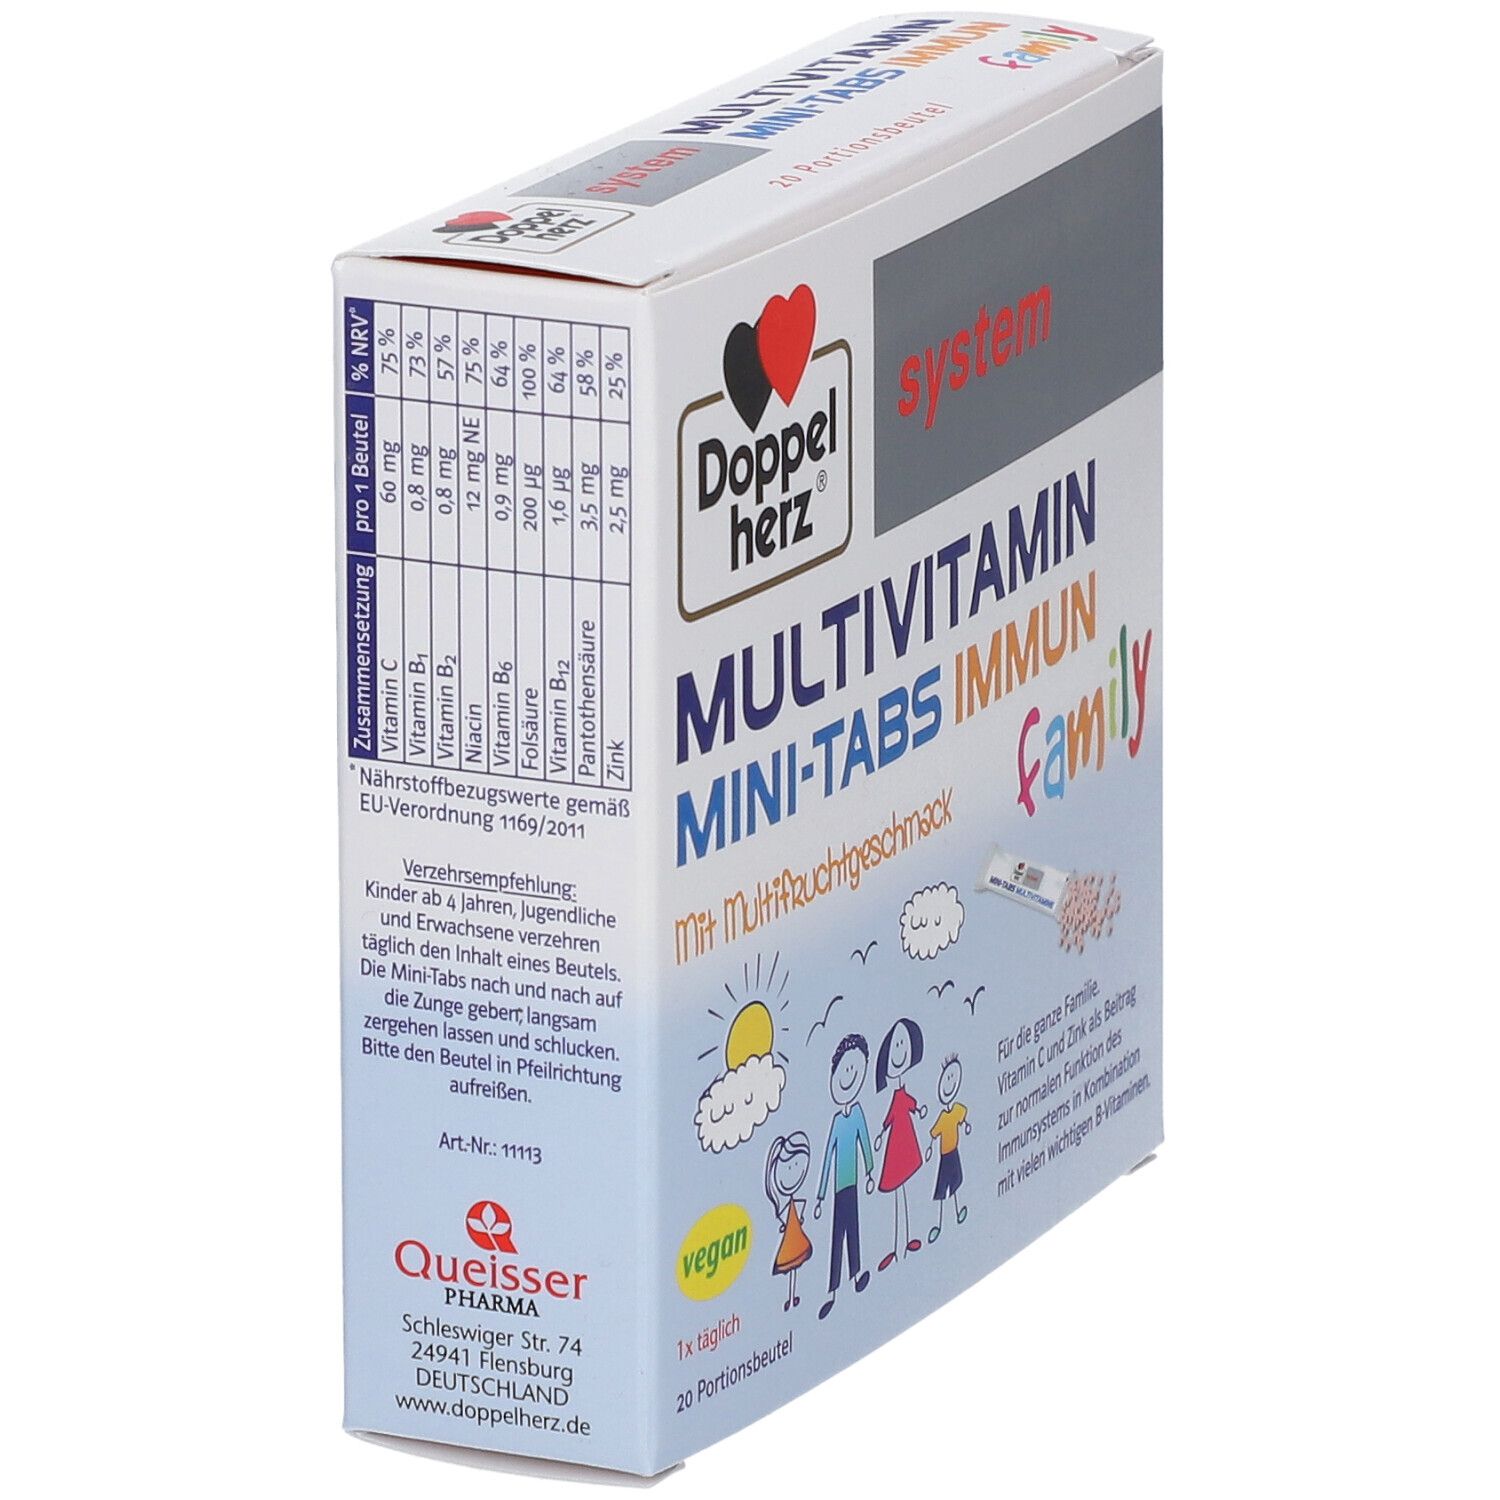 Doppelherz® system MULTIVITAMIN MINI-TABS Family avec saveur multivitaminée